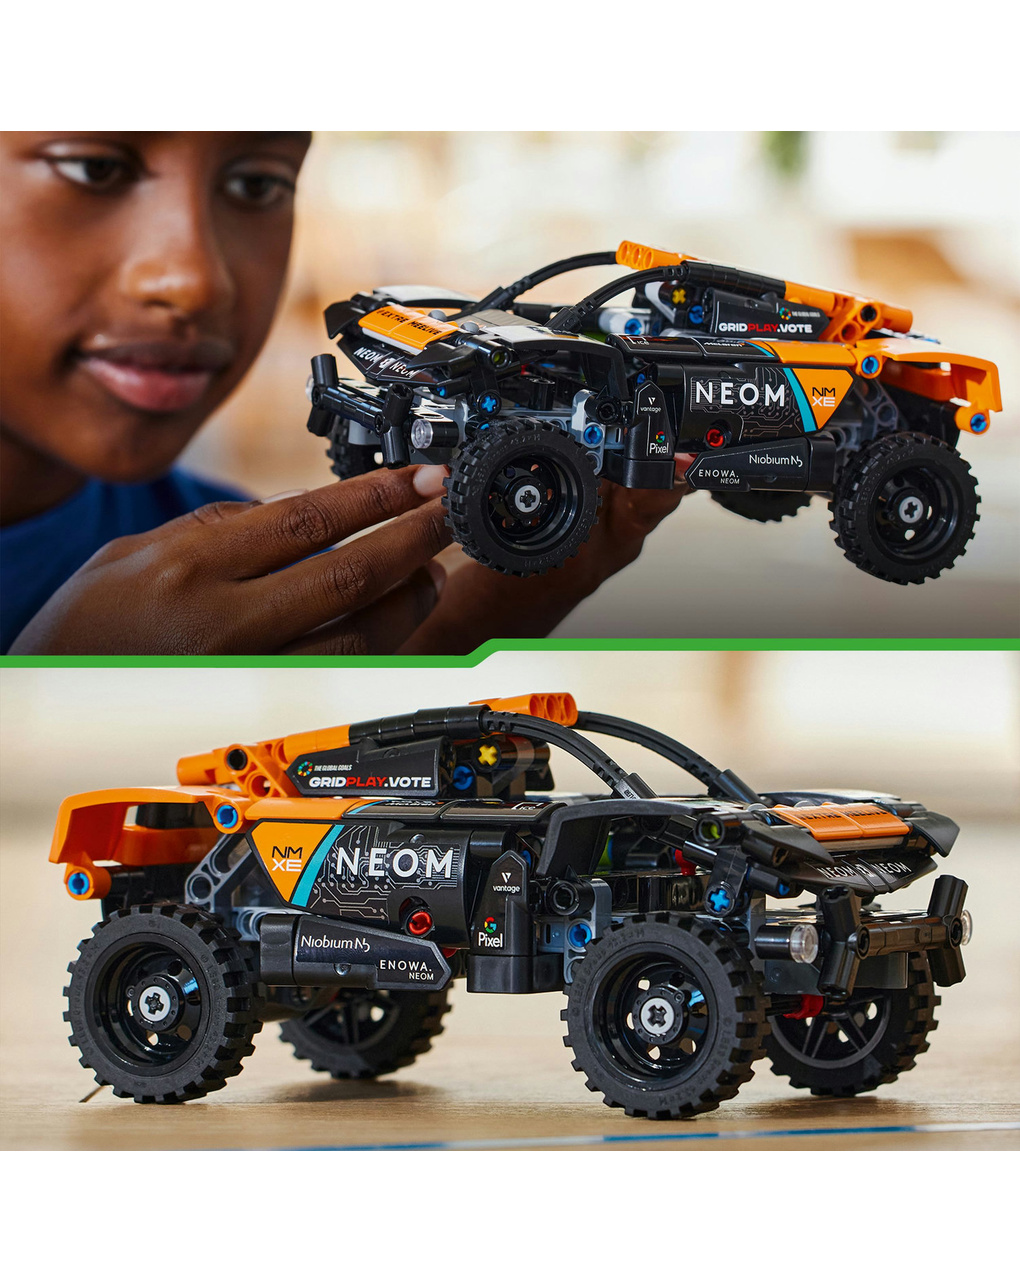 Neom mclaren extreme e race car - 42166 - lego technic - LEGO